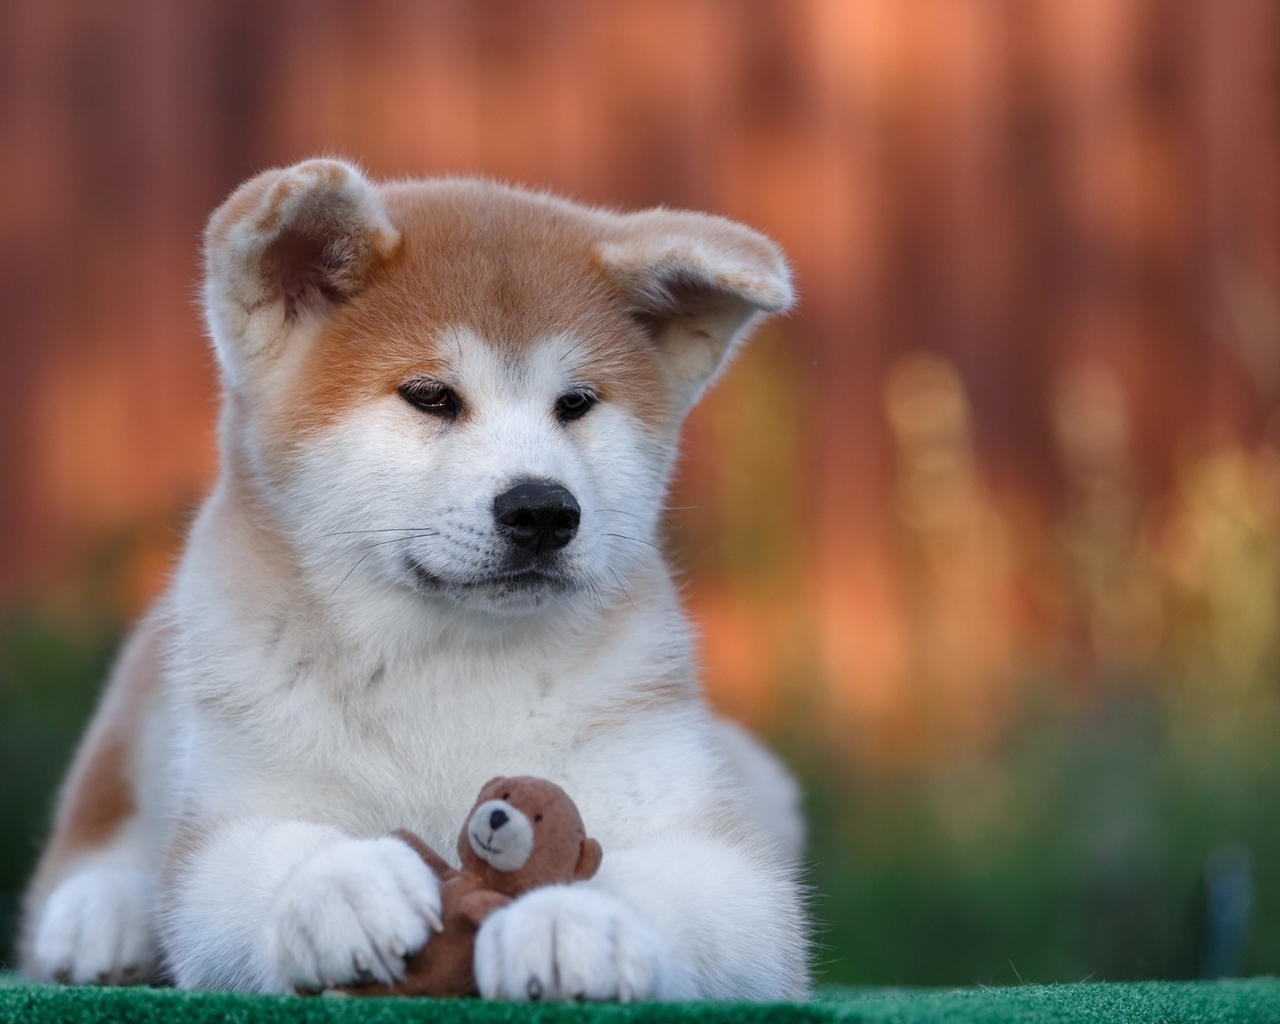 Image: Dog, Akita, dog, fur, snout, ears, feet, toy